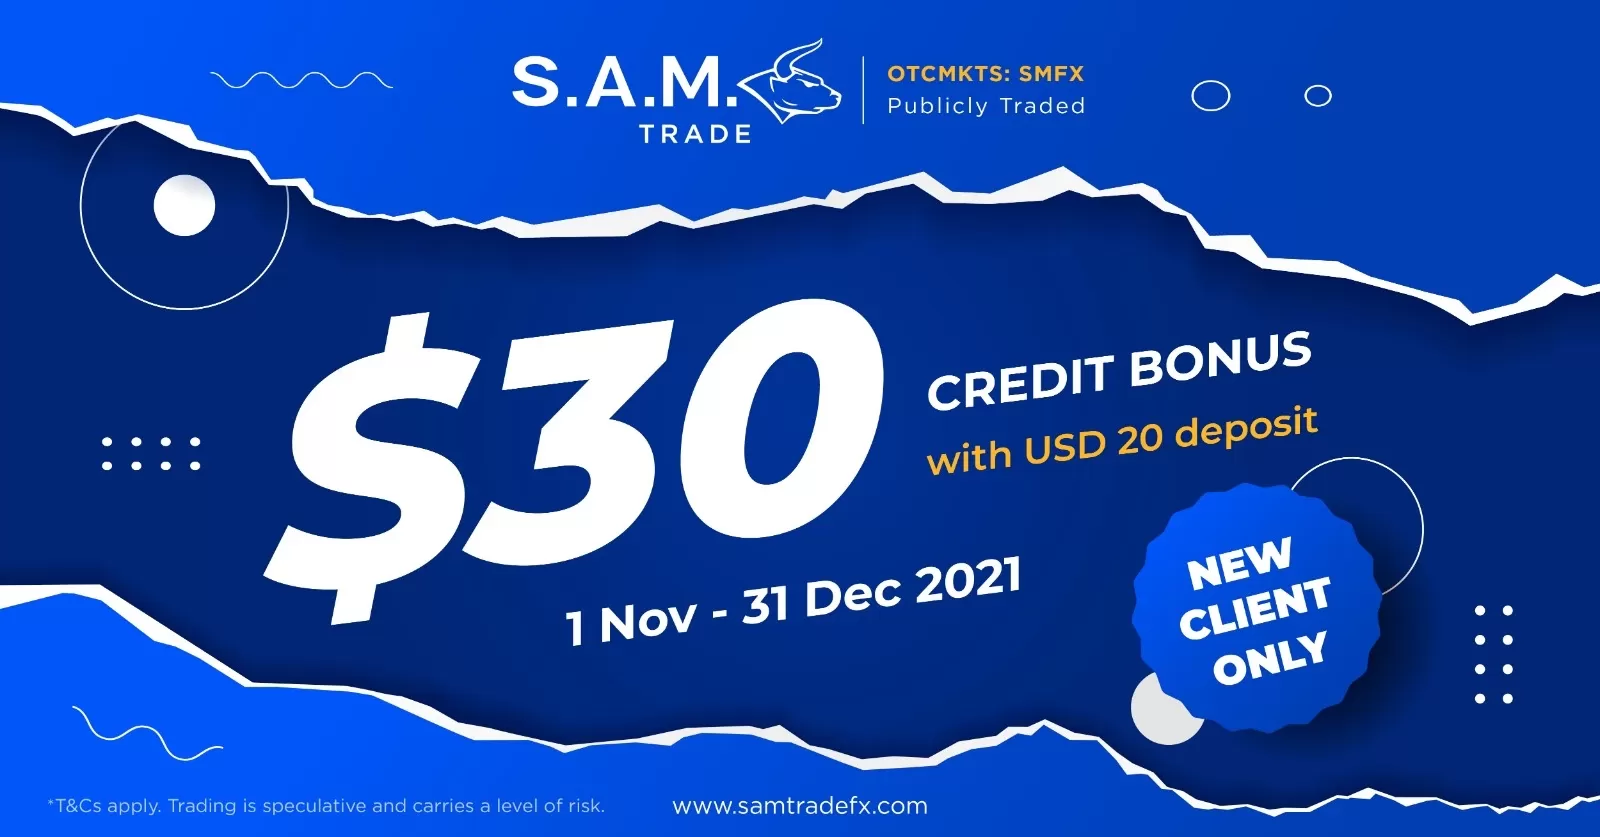 Get $30 credit bonus on Samtrade FX